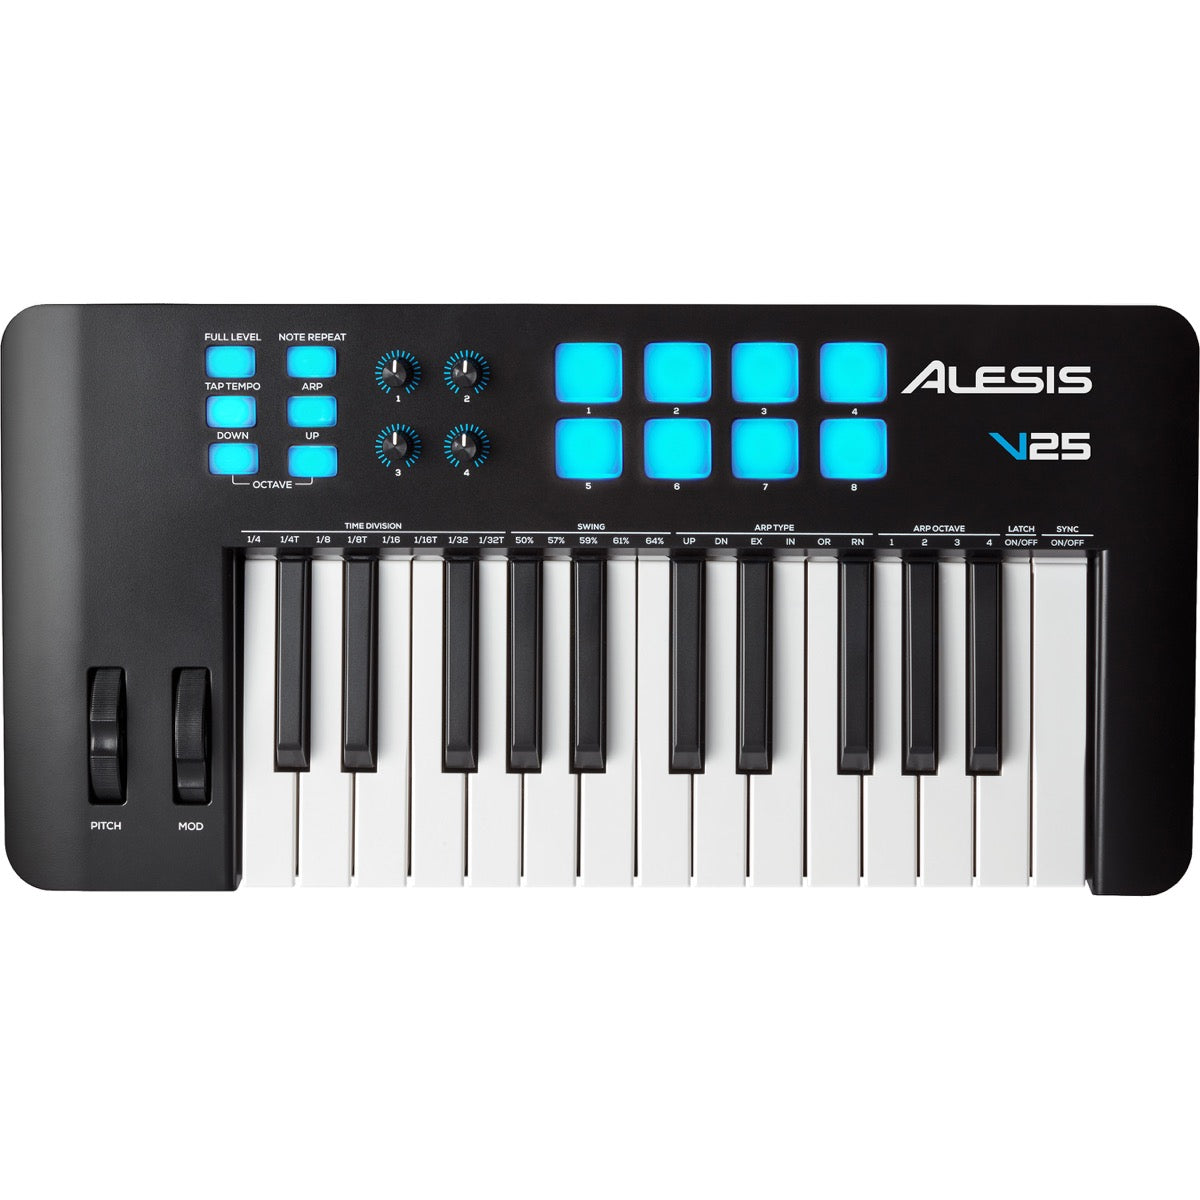 Alesis V25 MKII 25-Key USB-MIDI Keyboard Controller View 1